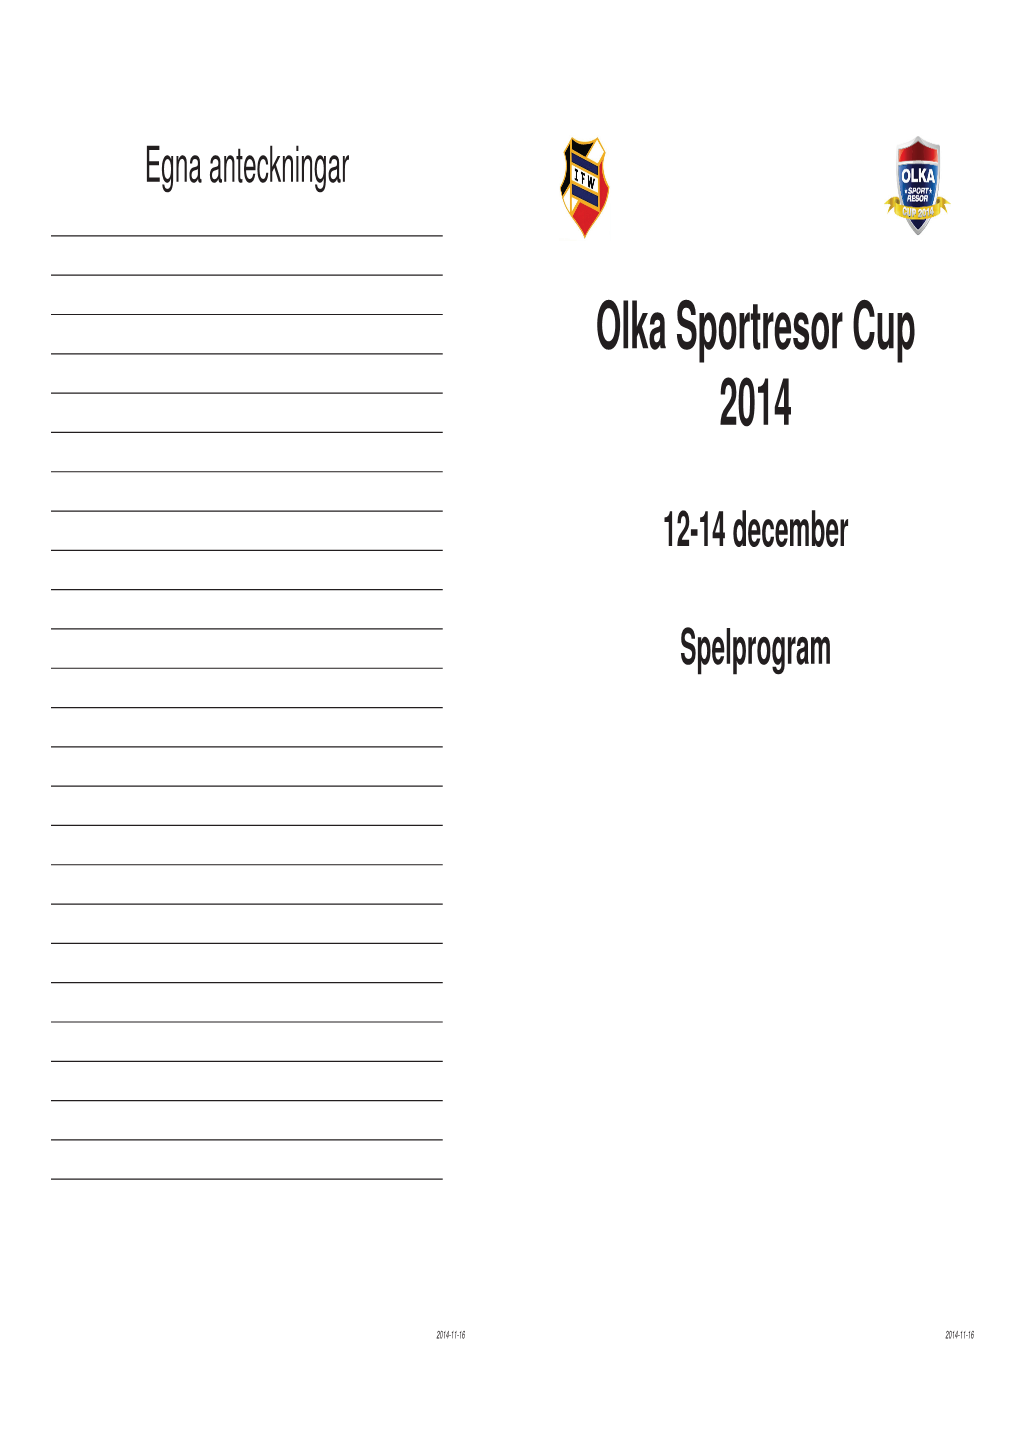 Olka Sportresor Cup 2014